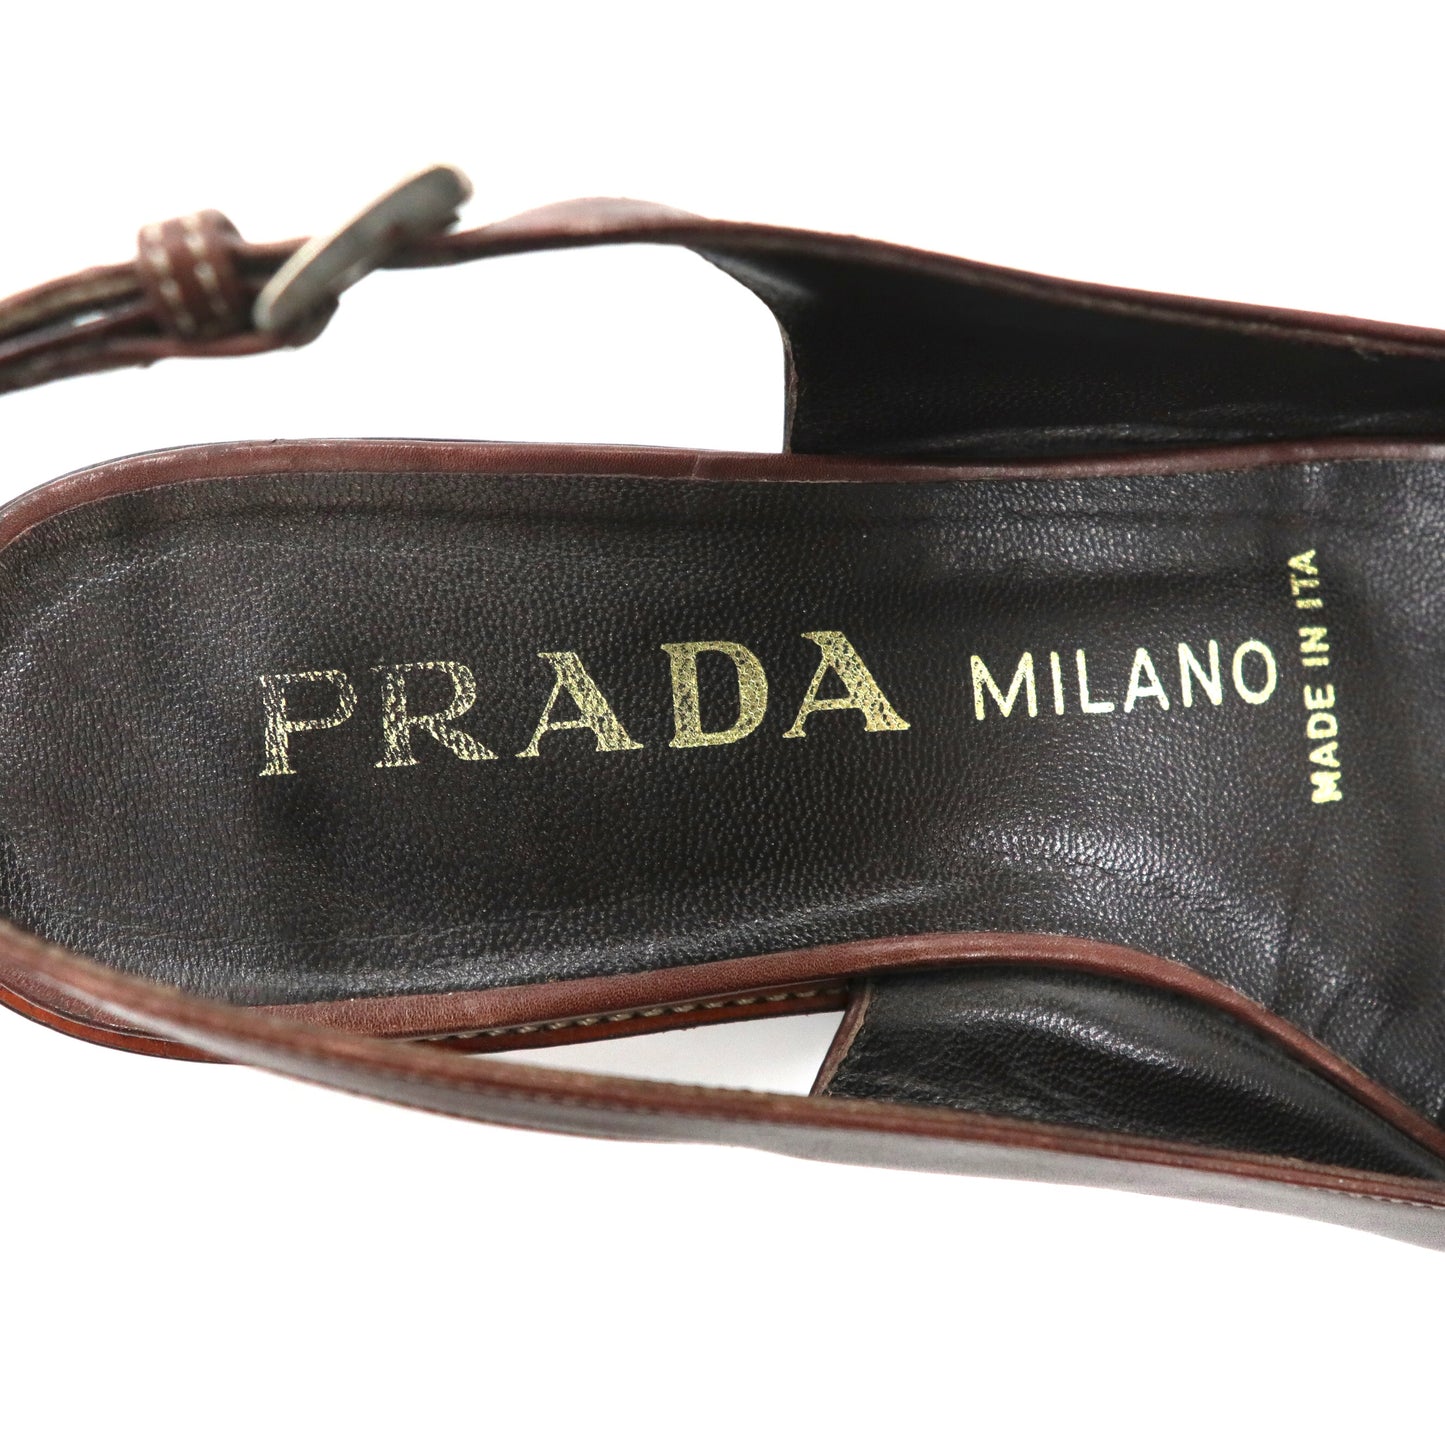 PRADA レザーサンダル 23cm ブラウン イタリア製